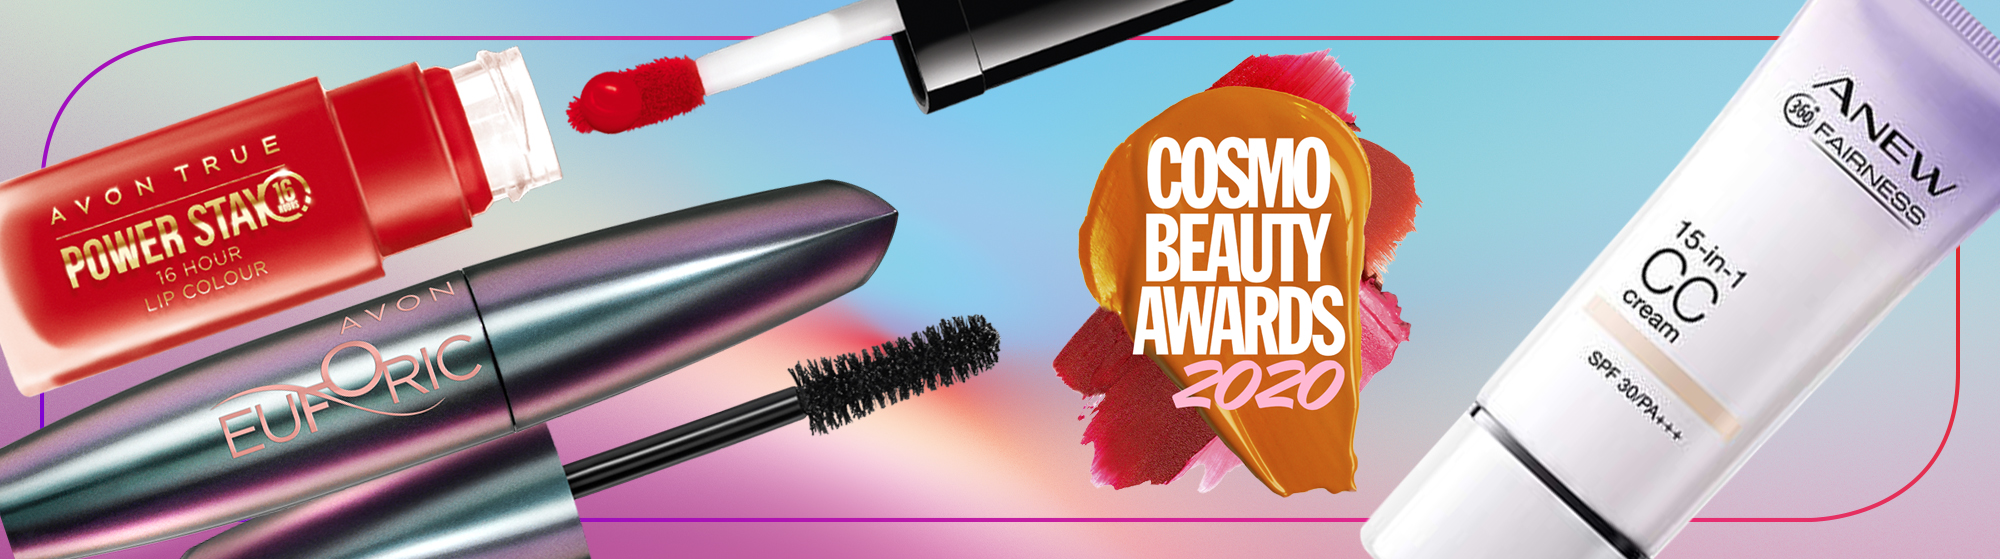 Cosmo Beauty Awards